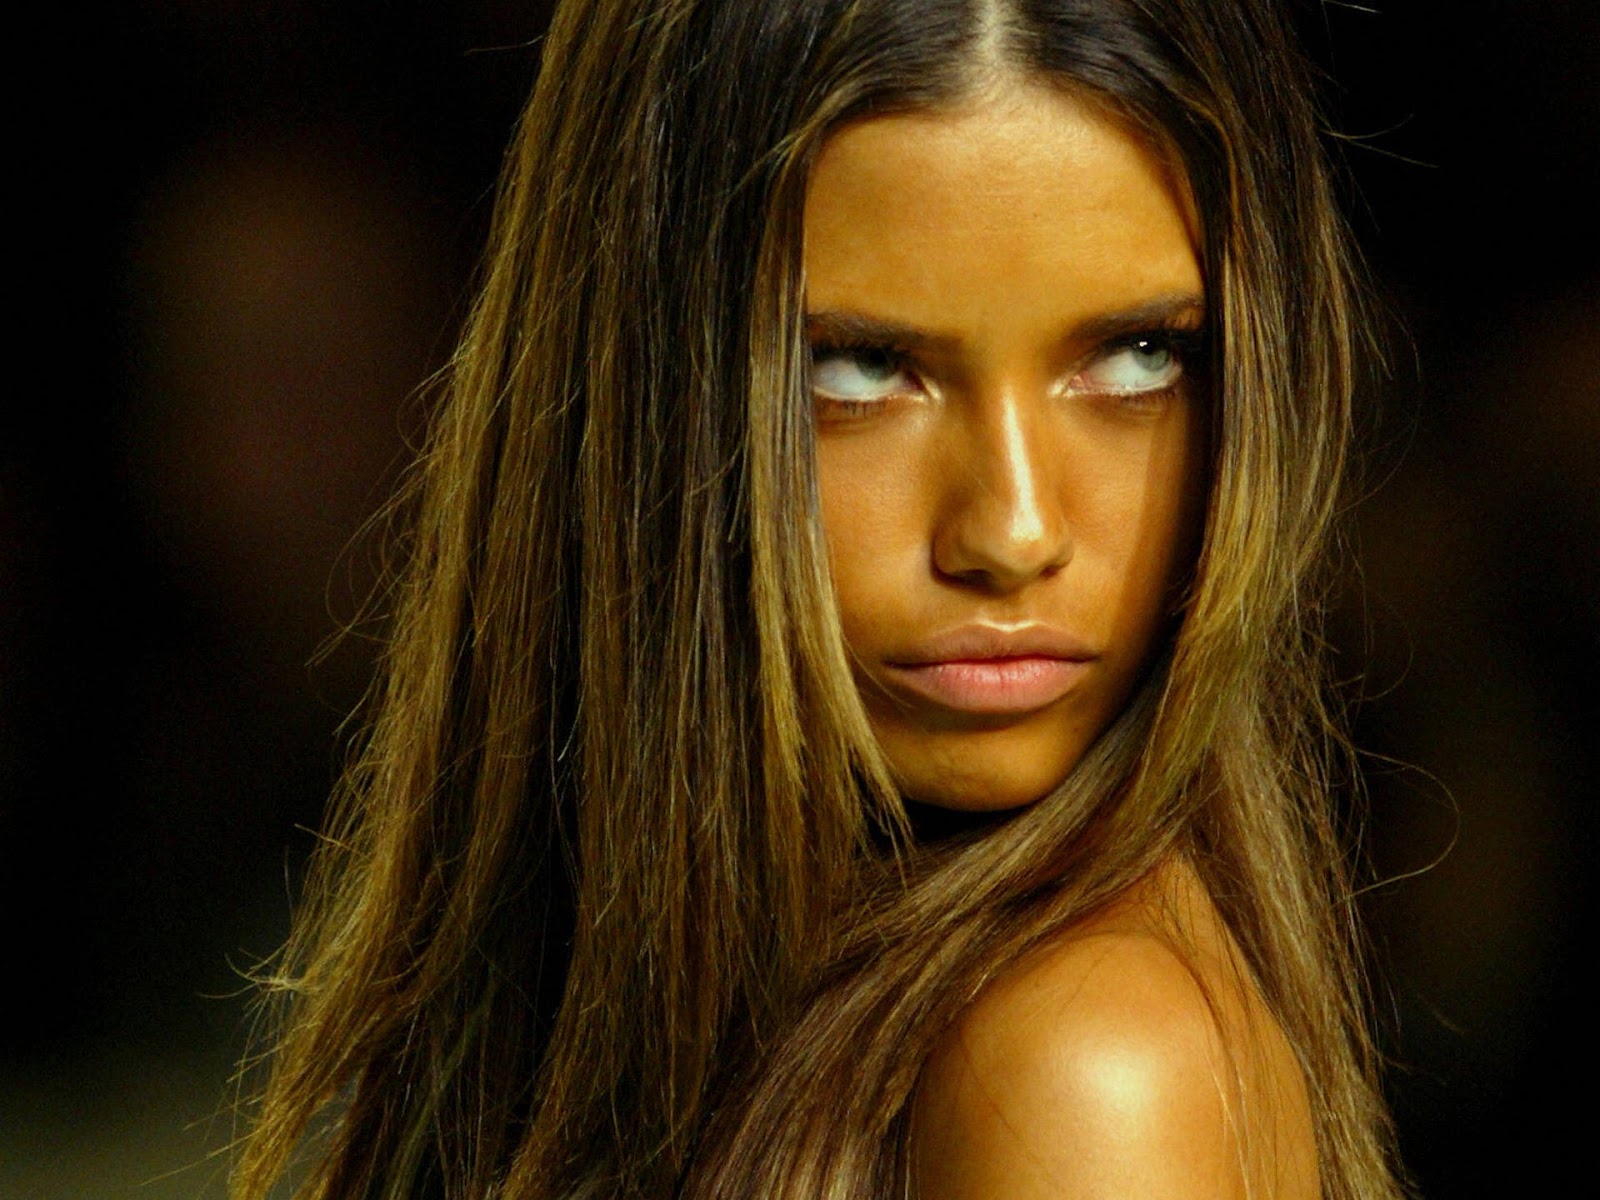 The Amazing Brazilian Model - Adriana Lima | Free Wallpapers ...